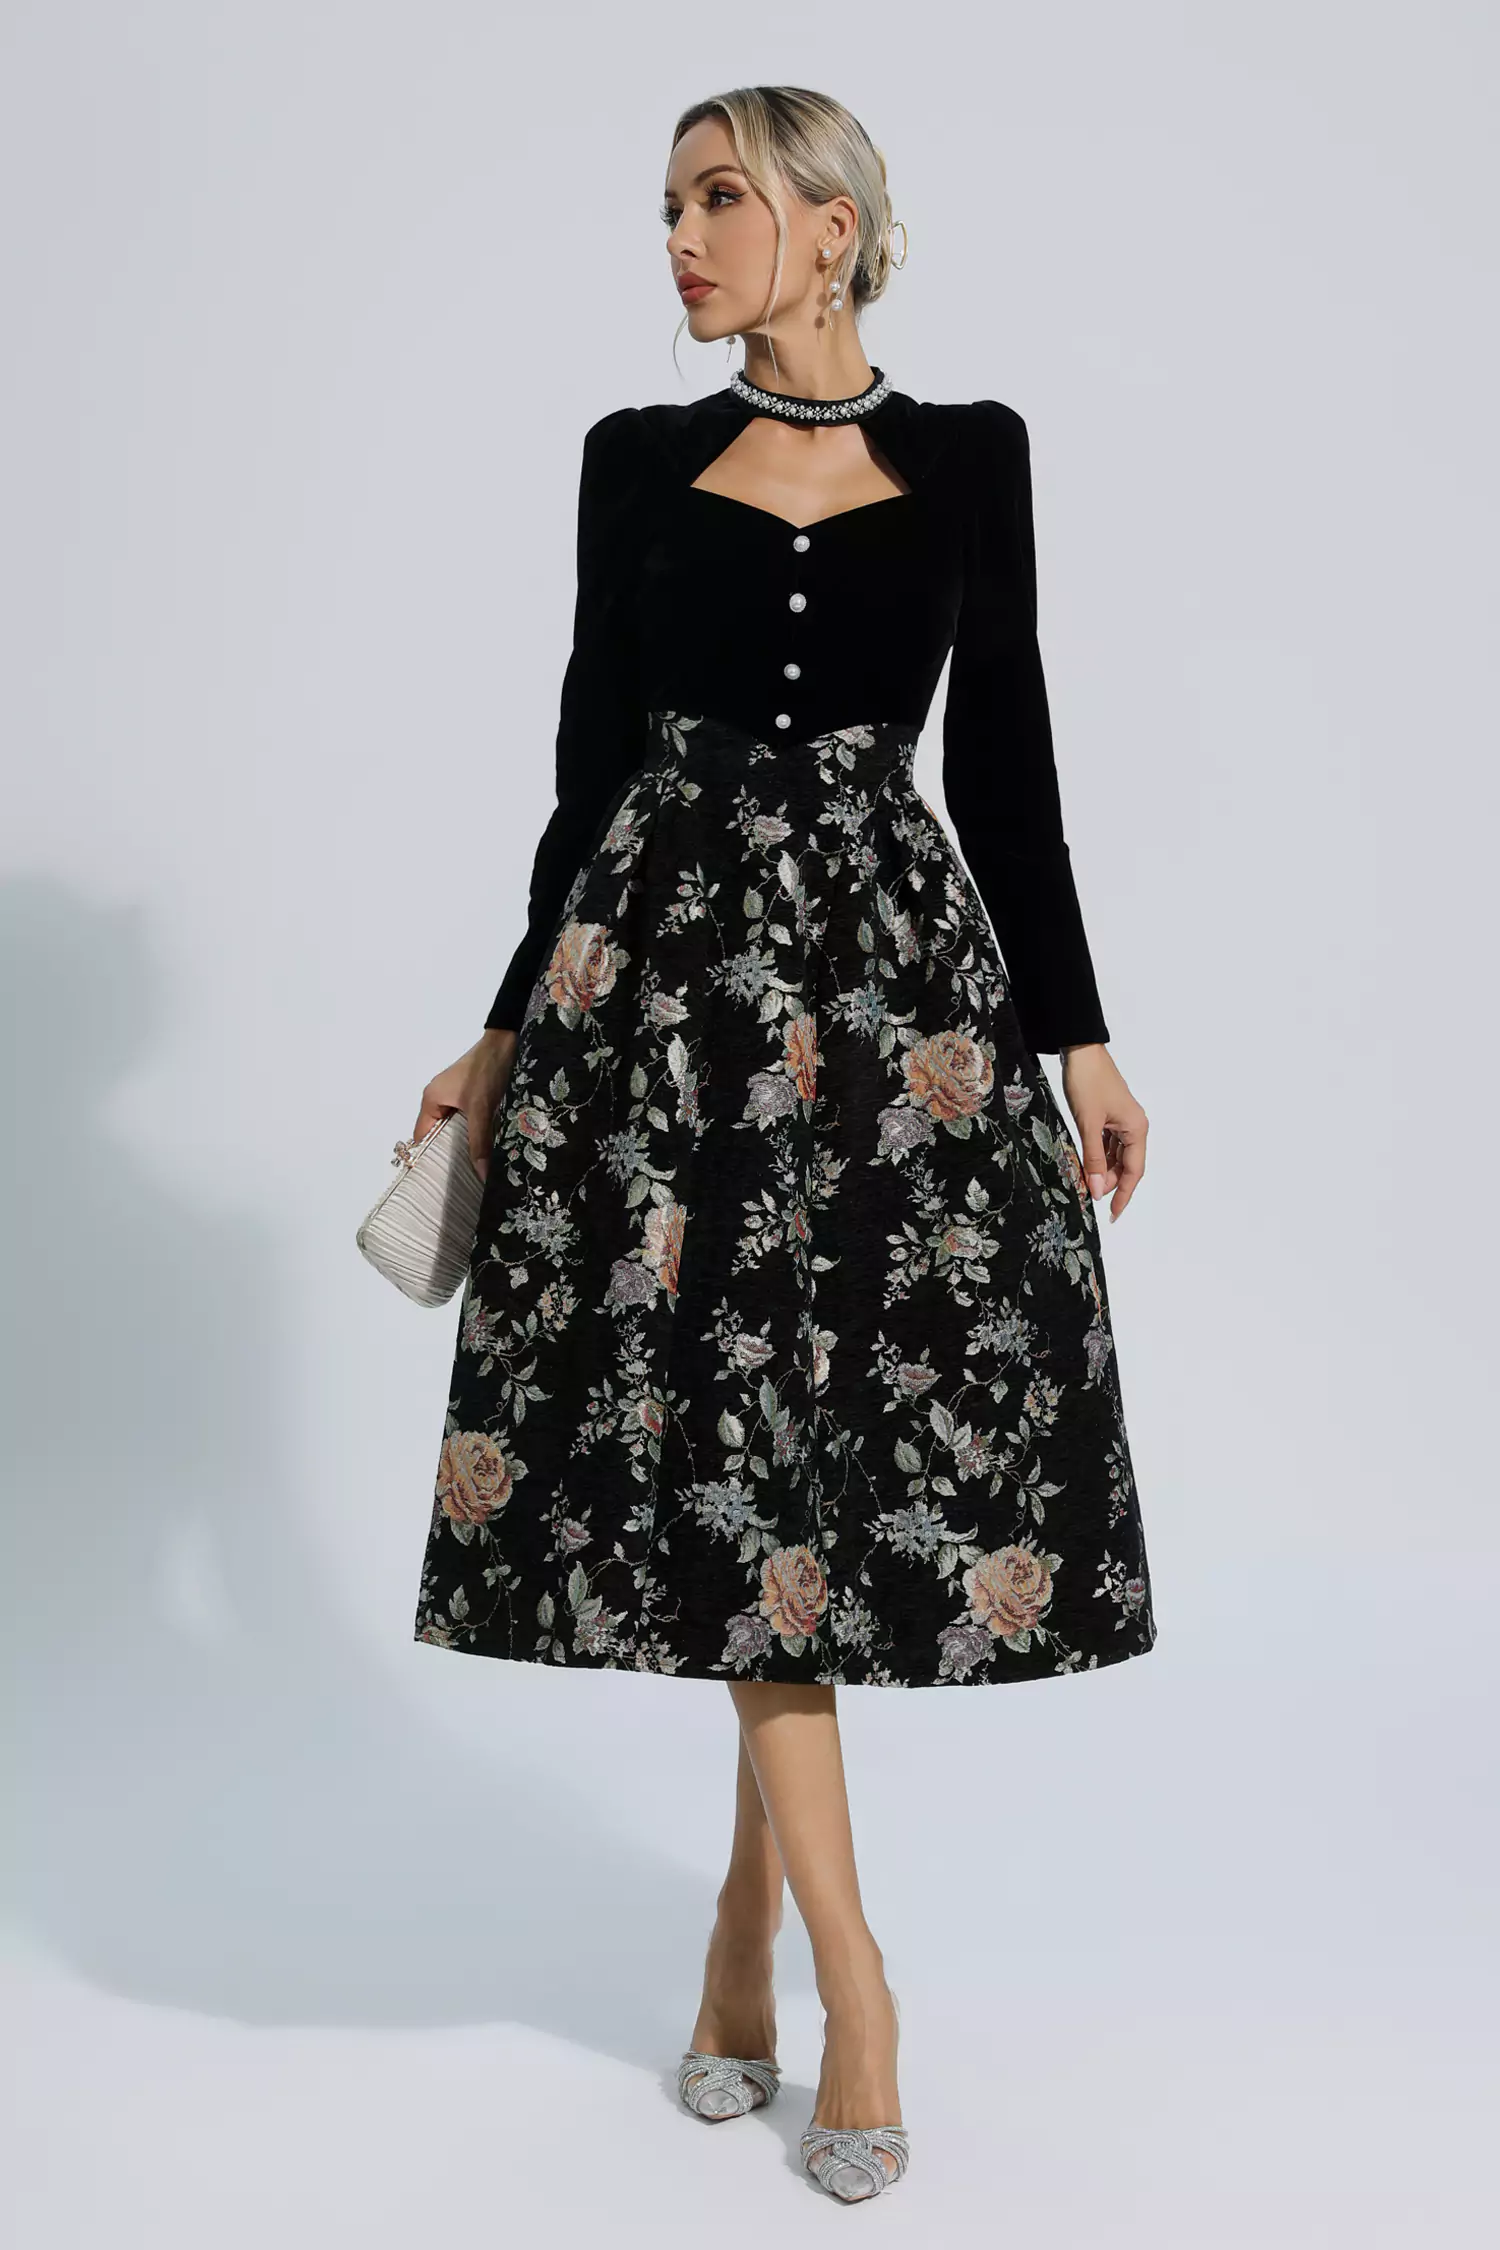 Skyla Black Waist Floral Long Sleeve Dress